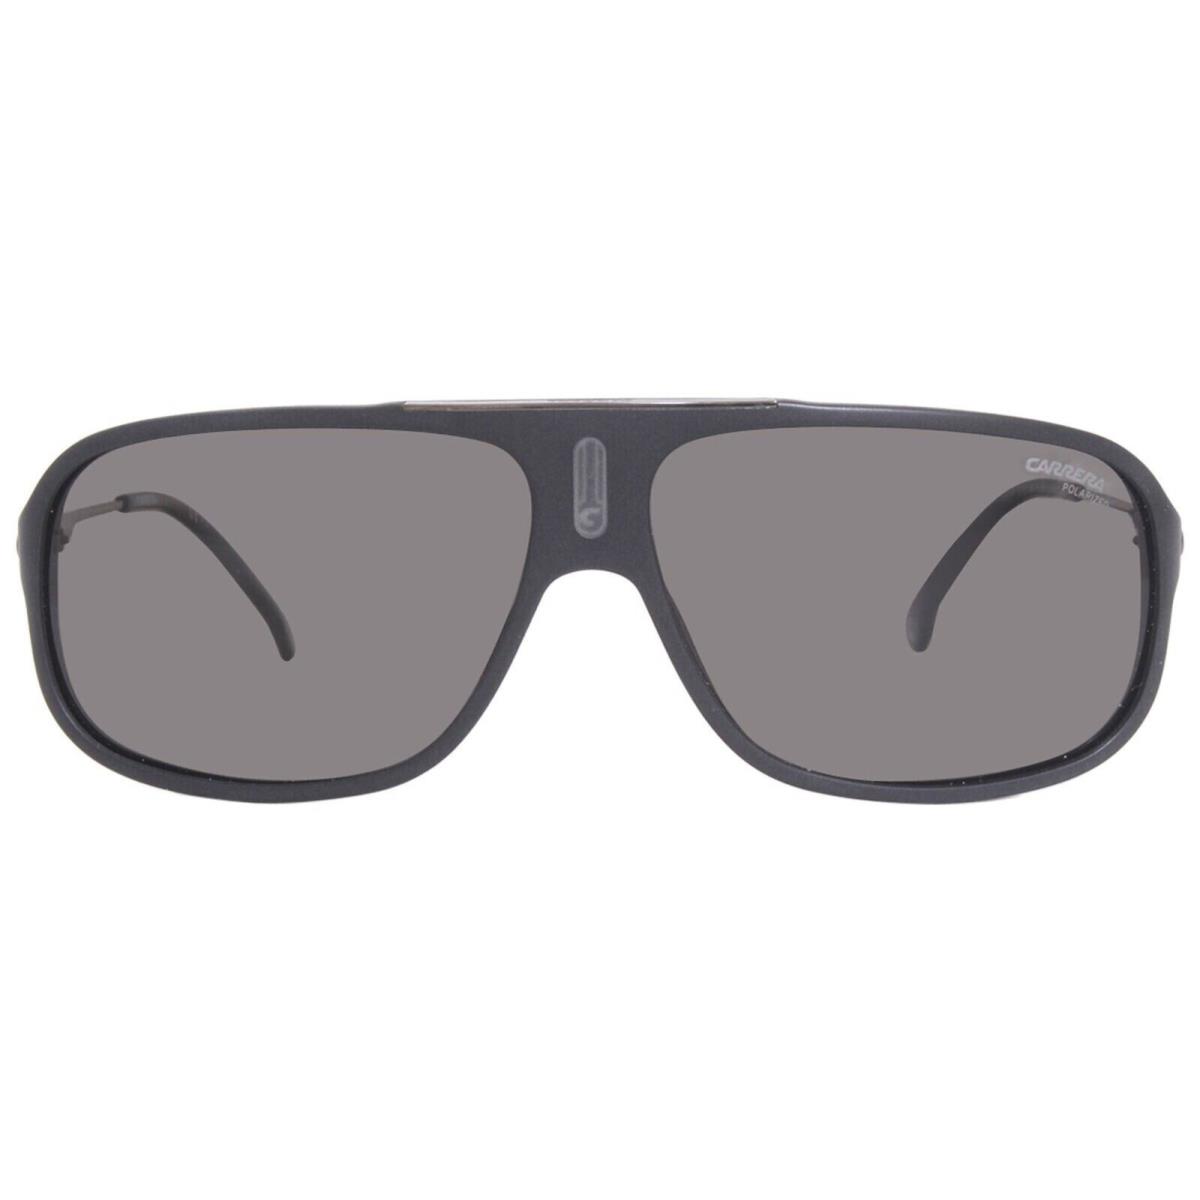 Carrera Cool65 003M9 Special Edition Sunglasses Men`s Matte Black/polarized 64mm